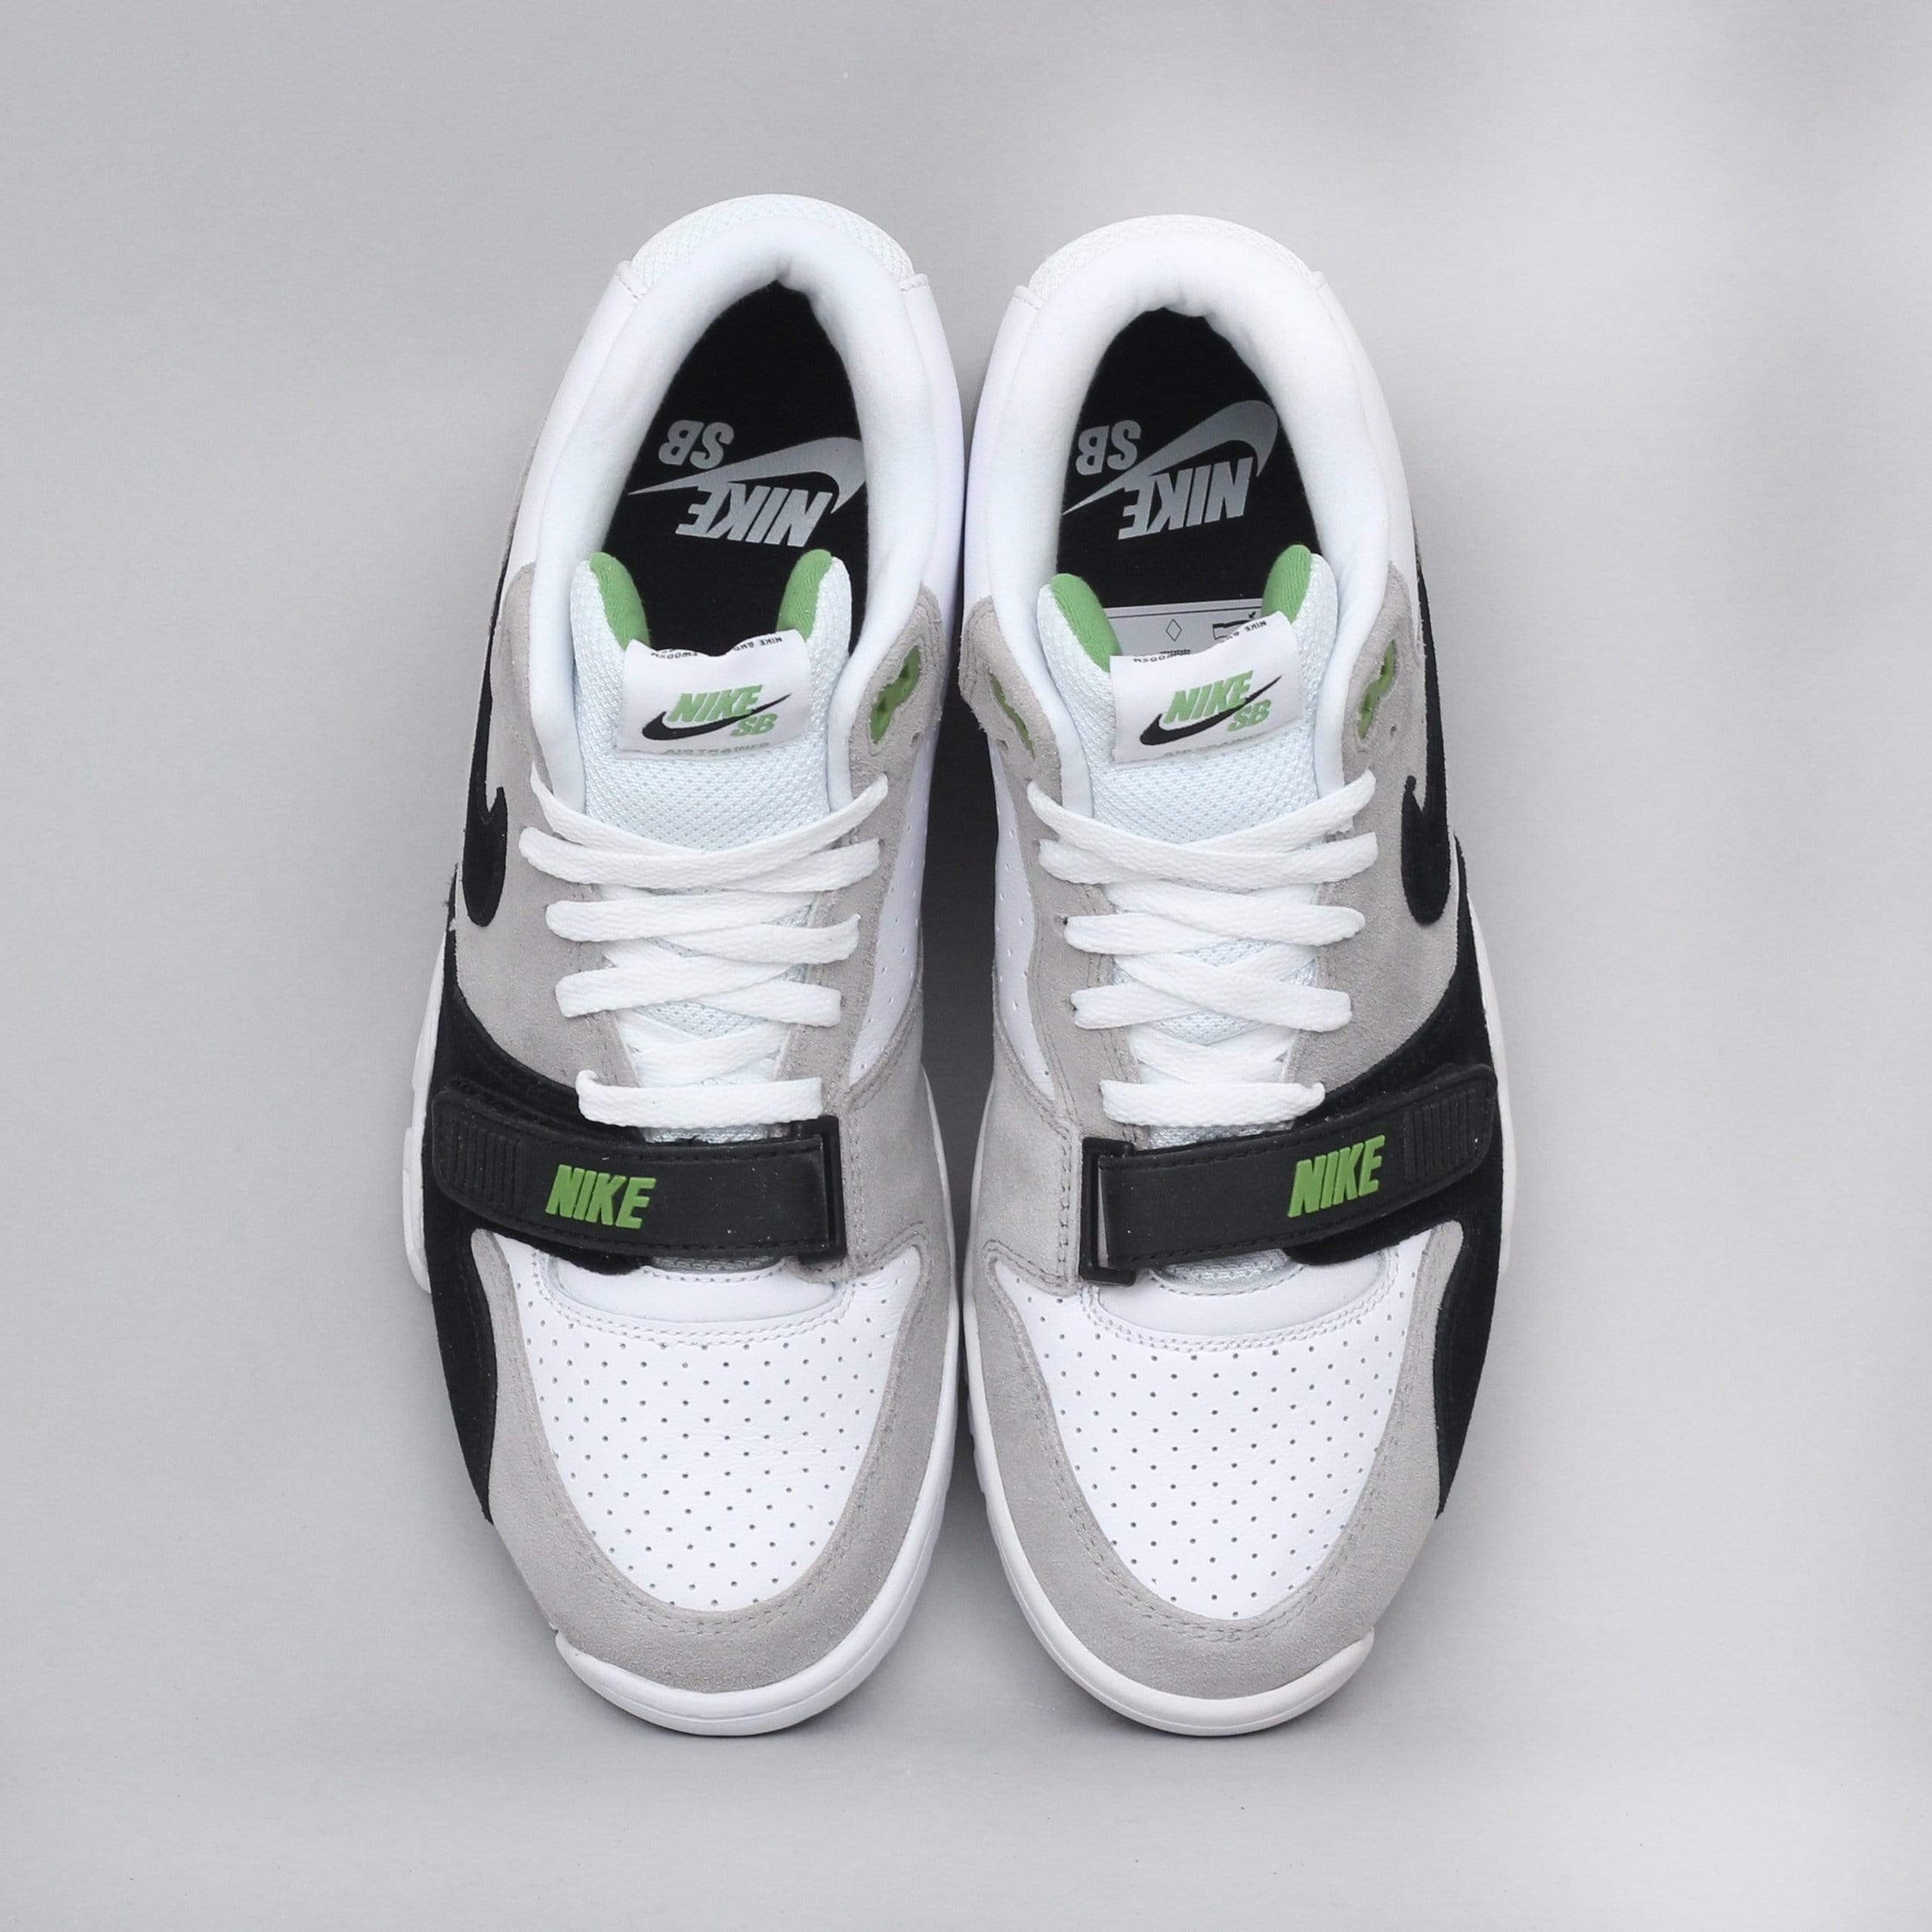 Nike SB Air Trainer I ISO Shoes Medium Grey / Black - White - Chlorophyll